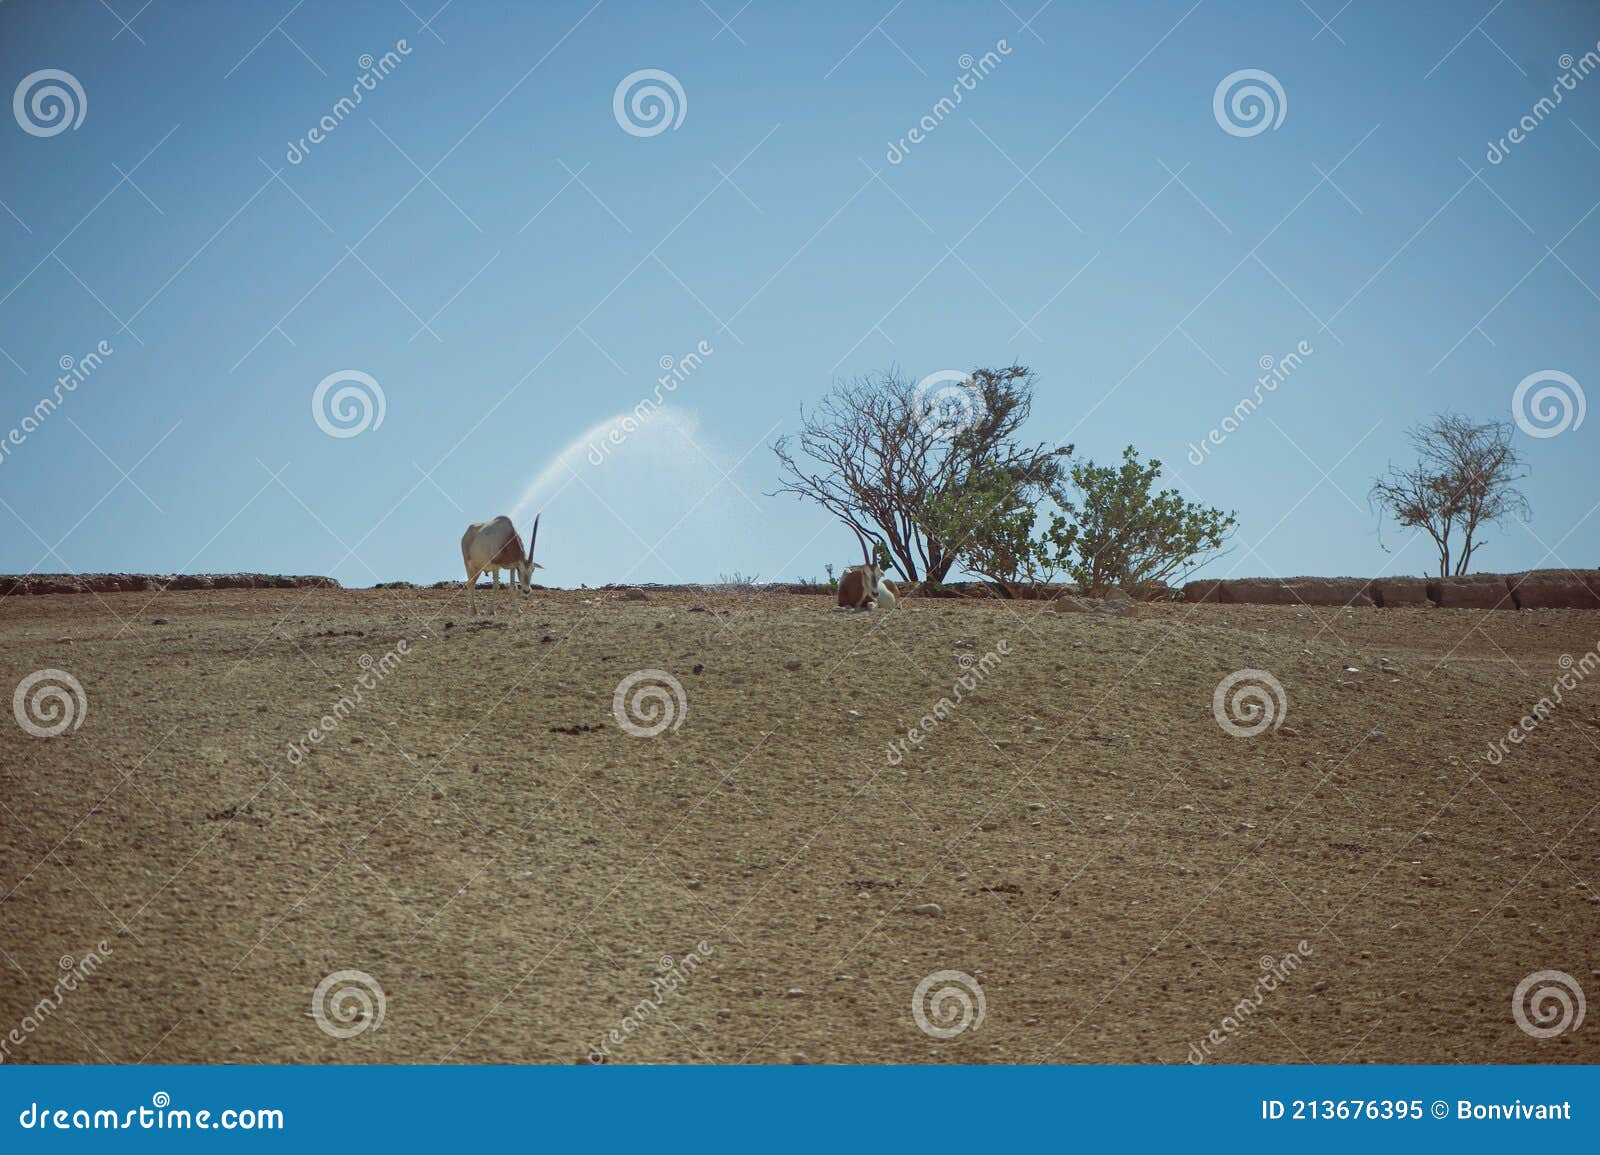 gazelles from safari& x27;s shuttle